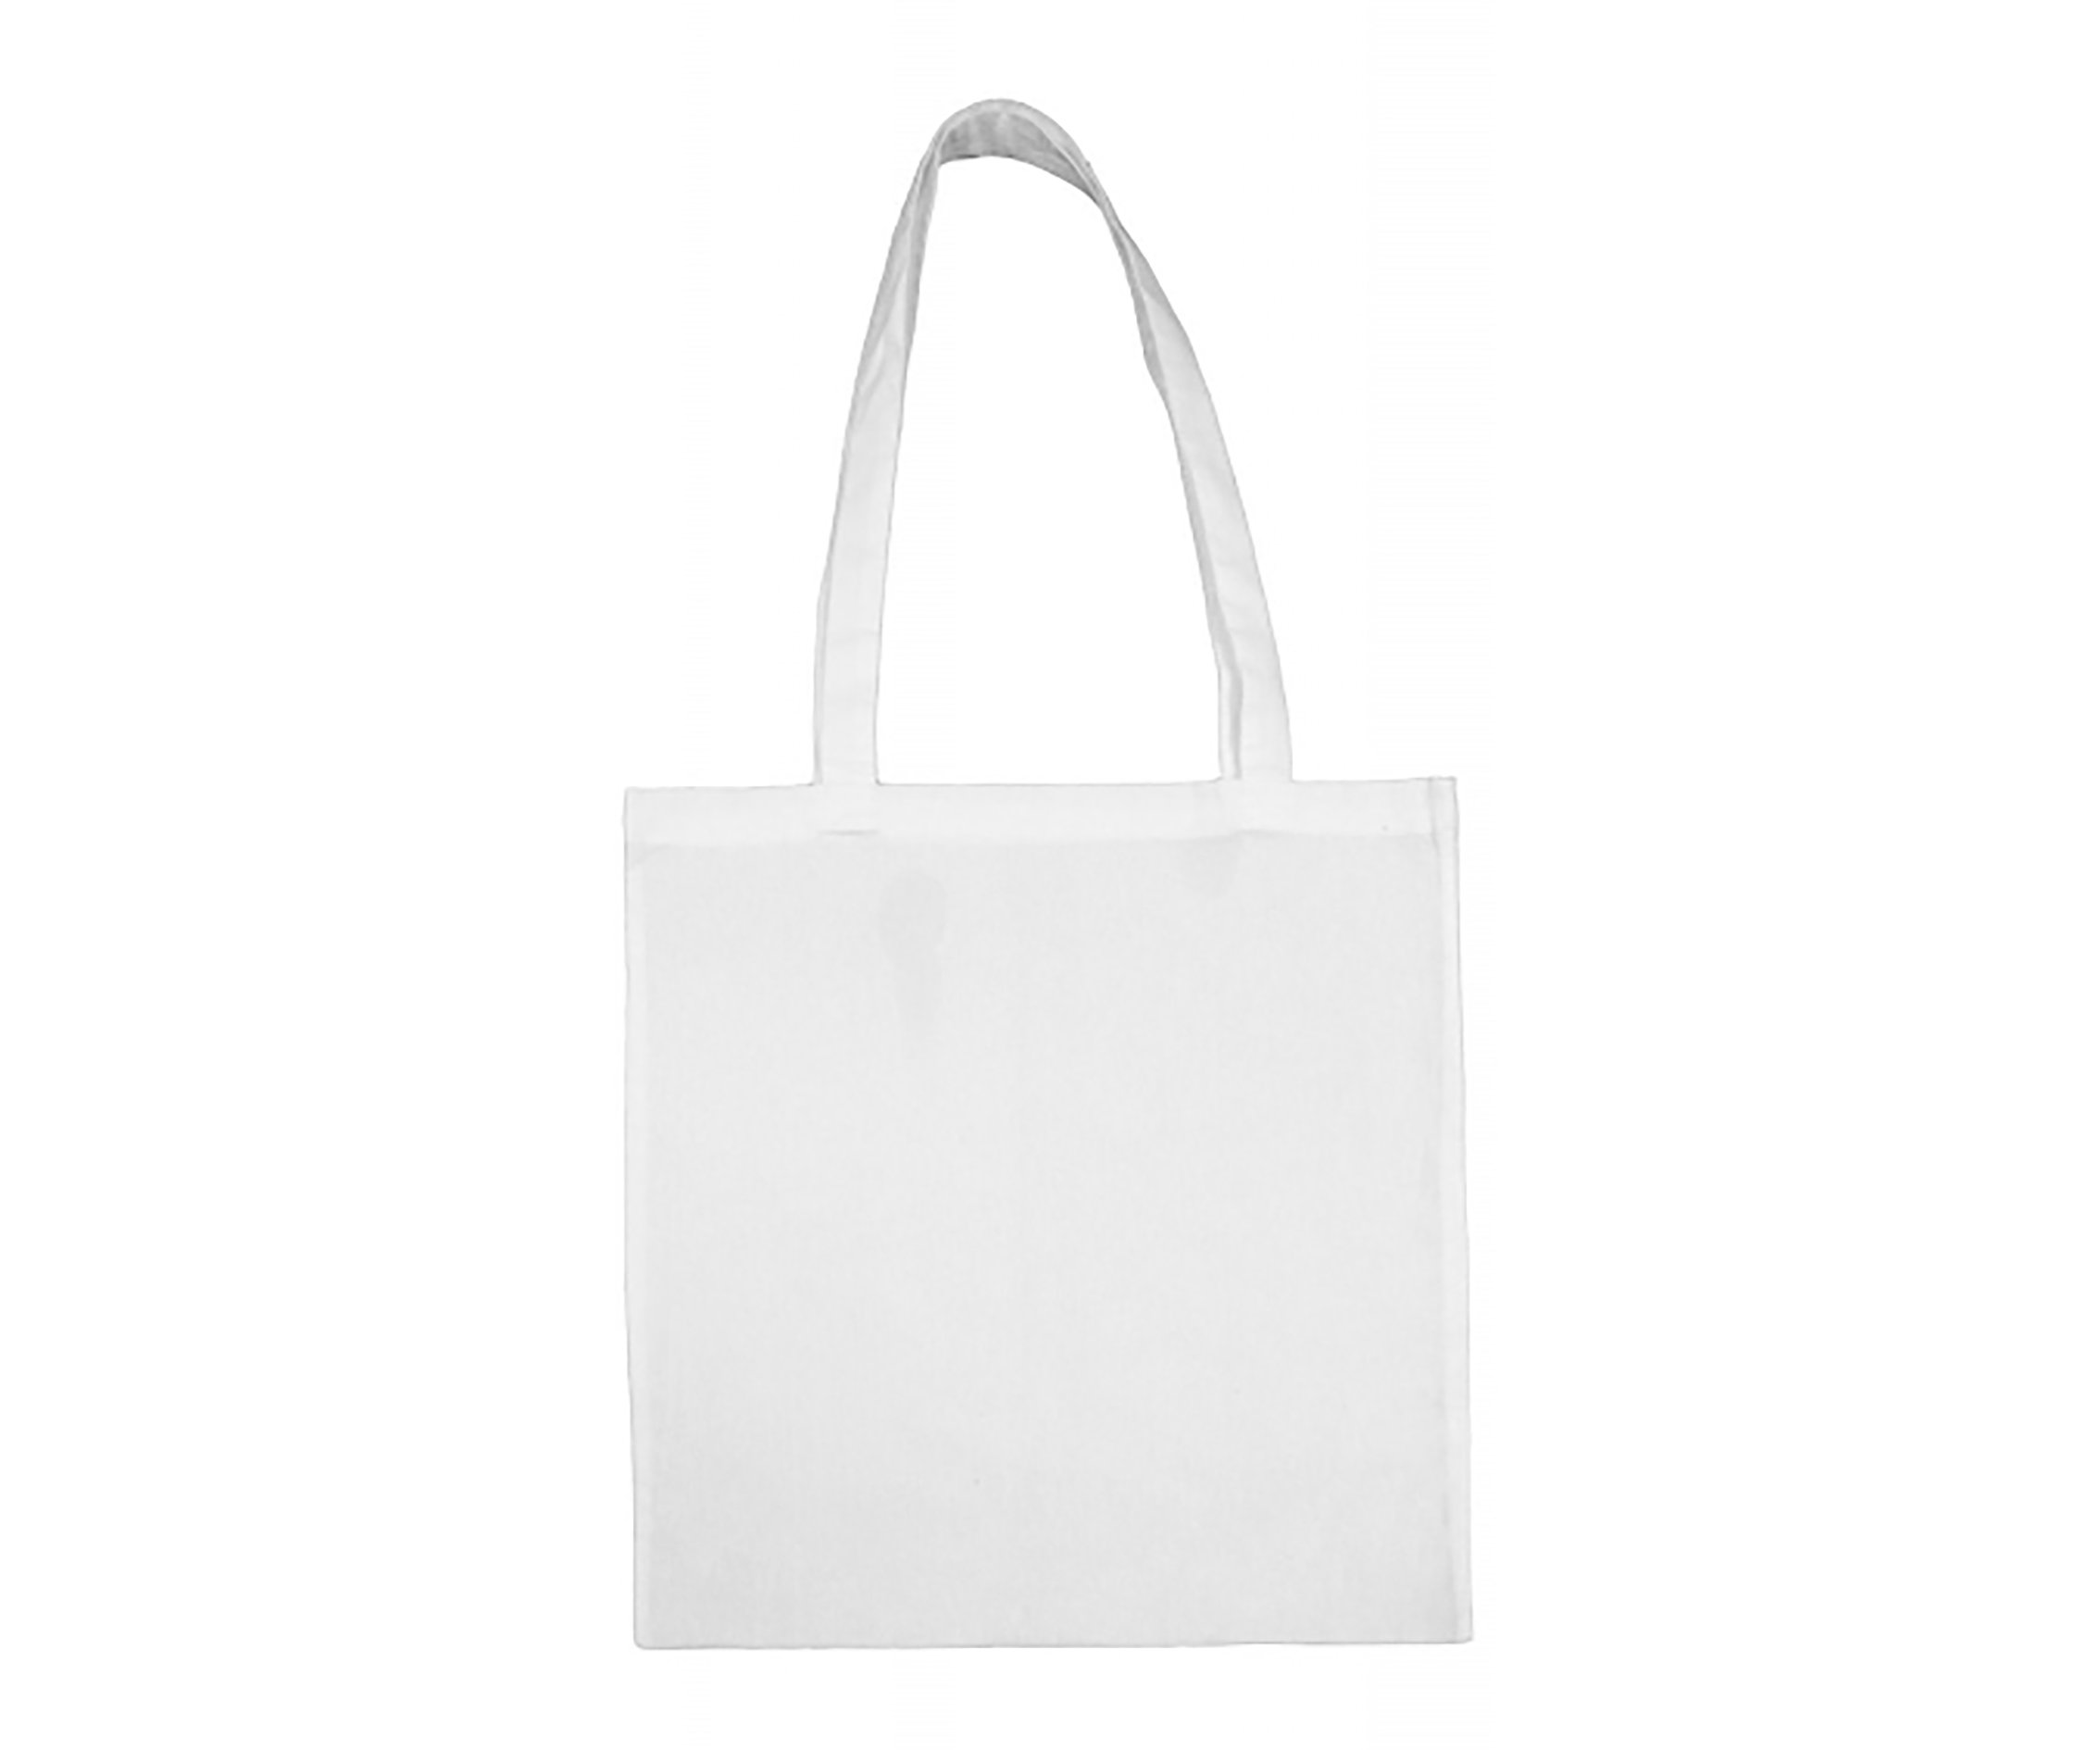 Jassz Bags Beech Cotton Large Handle Shopping Bag Tote